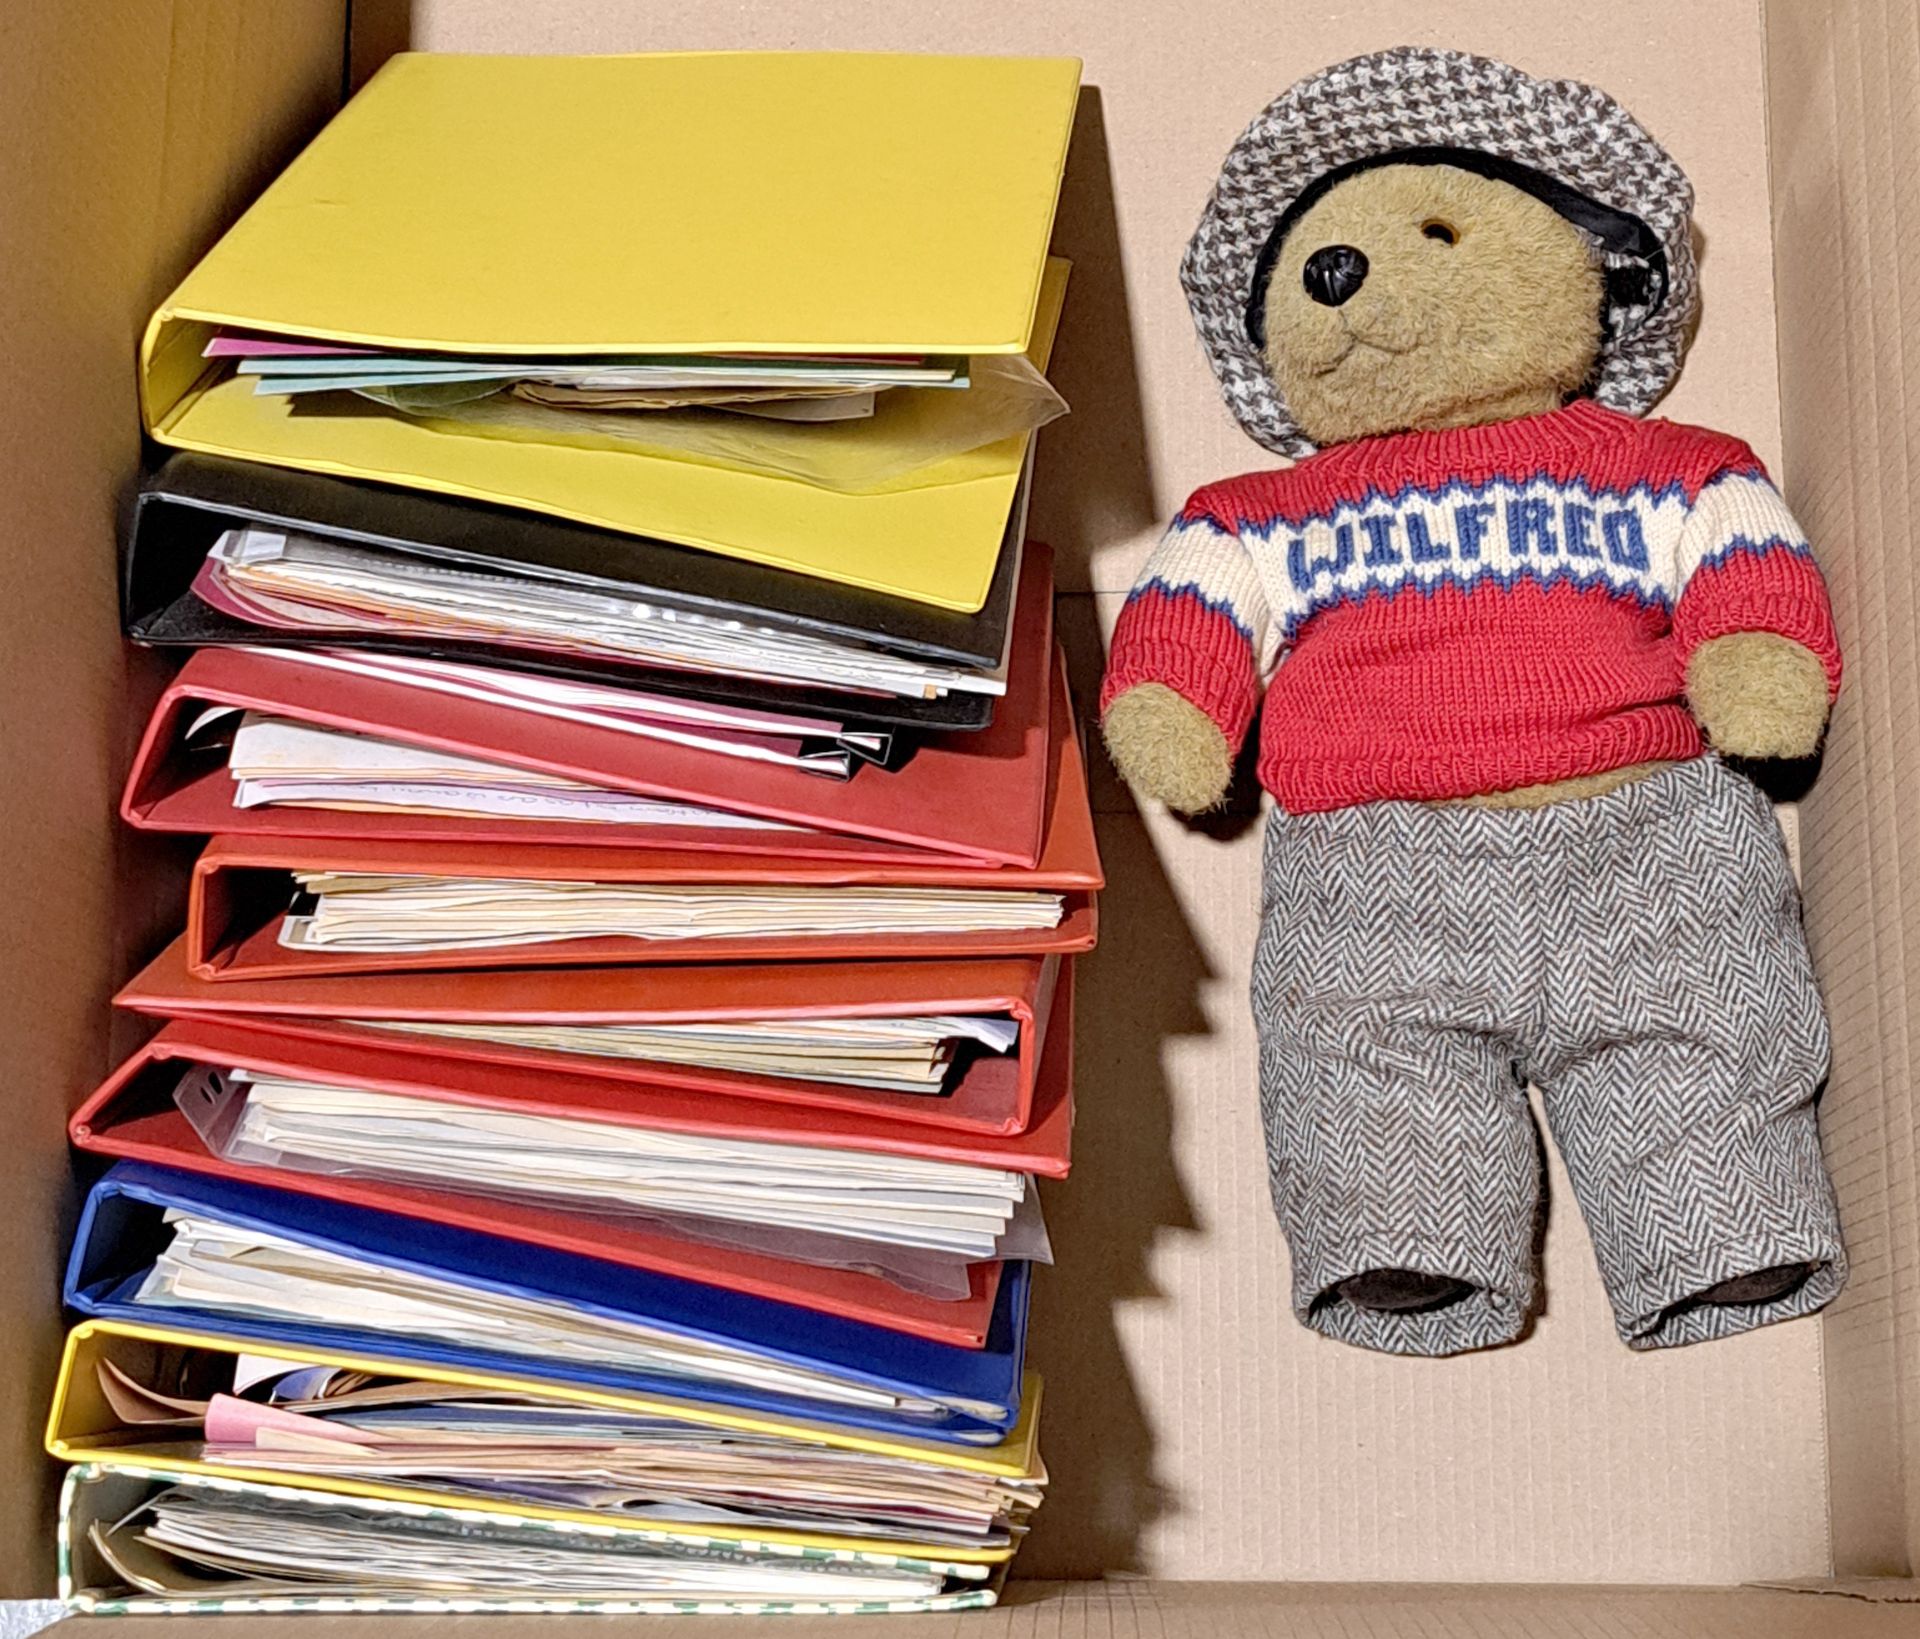 Little Folk Lakeland Bears "Wilfred" vintage teddy bear, plus files of correspondence from the La...